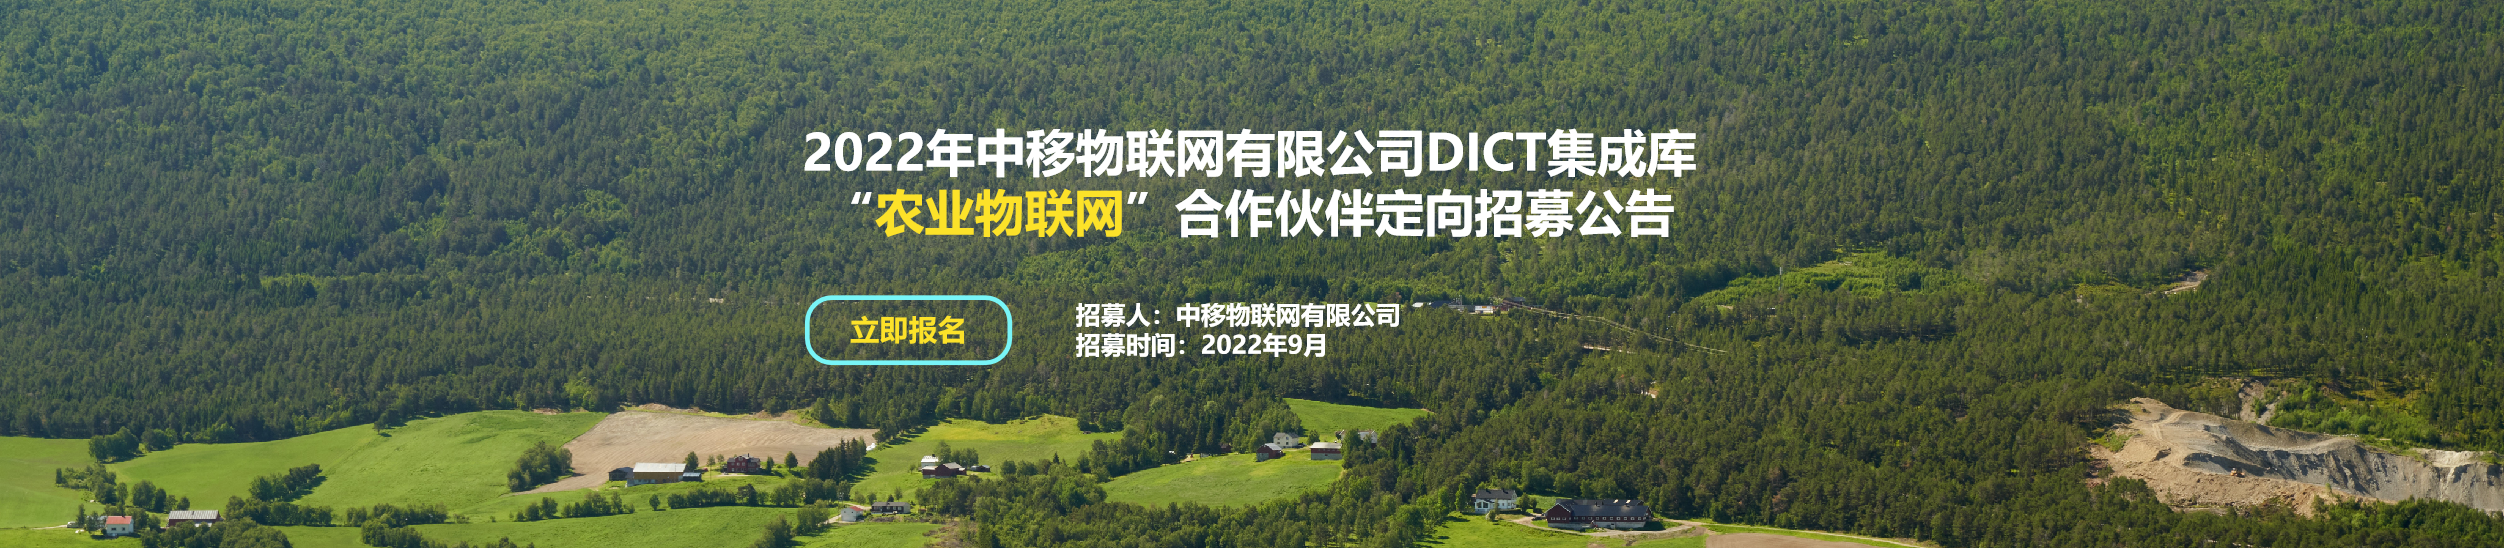 DICT集成库-农业物联网